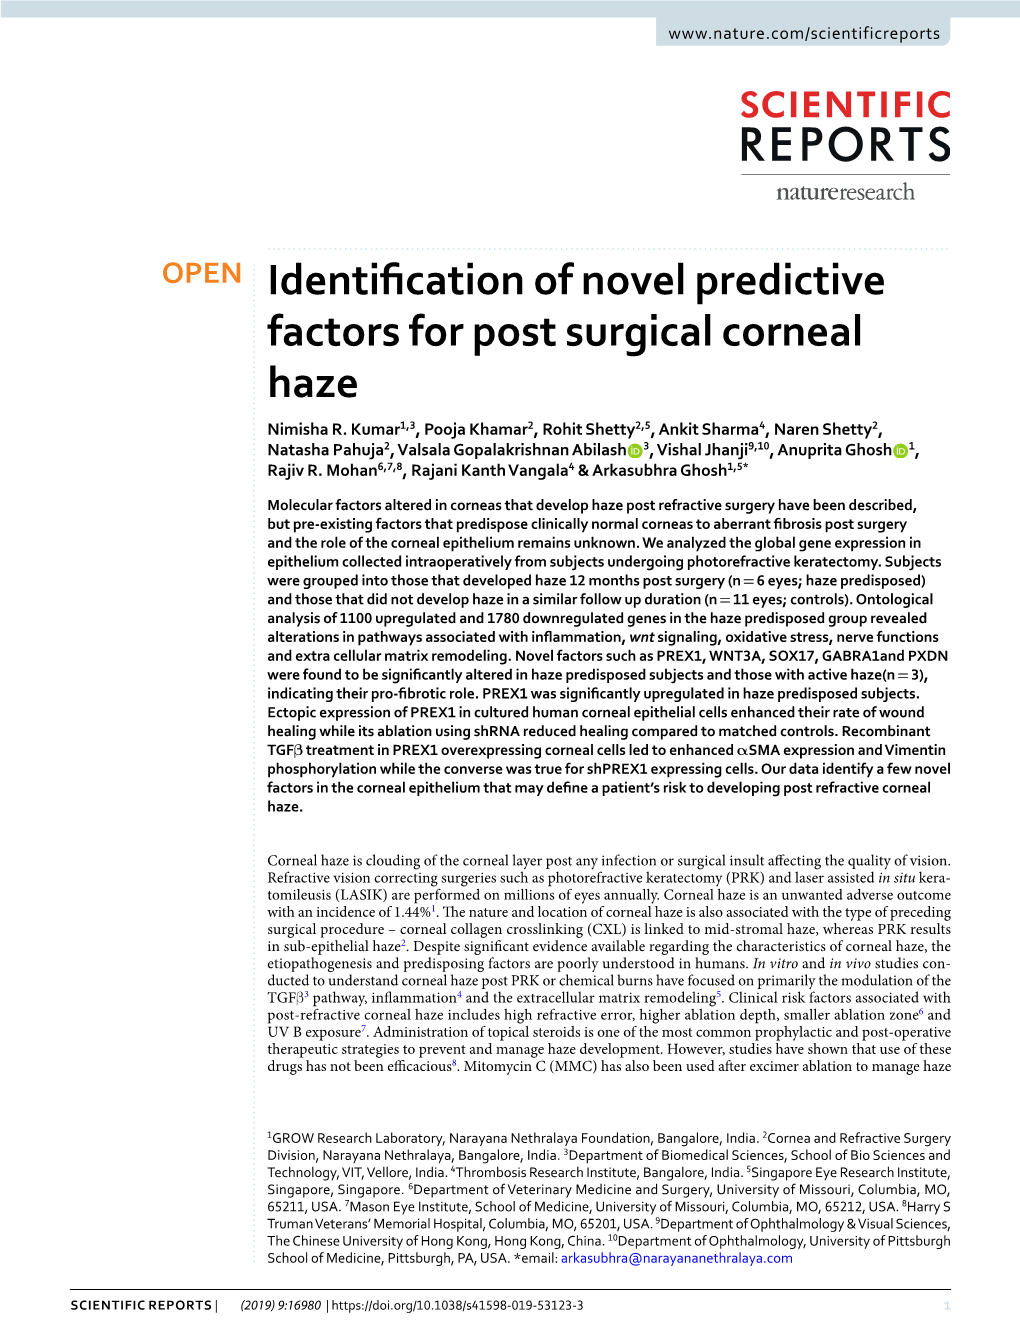 Identification of Novel Predictive Factors for Post Surgical Corneal Haze